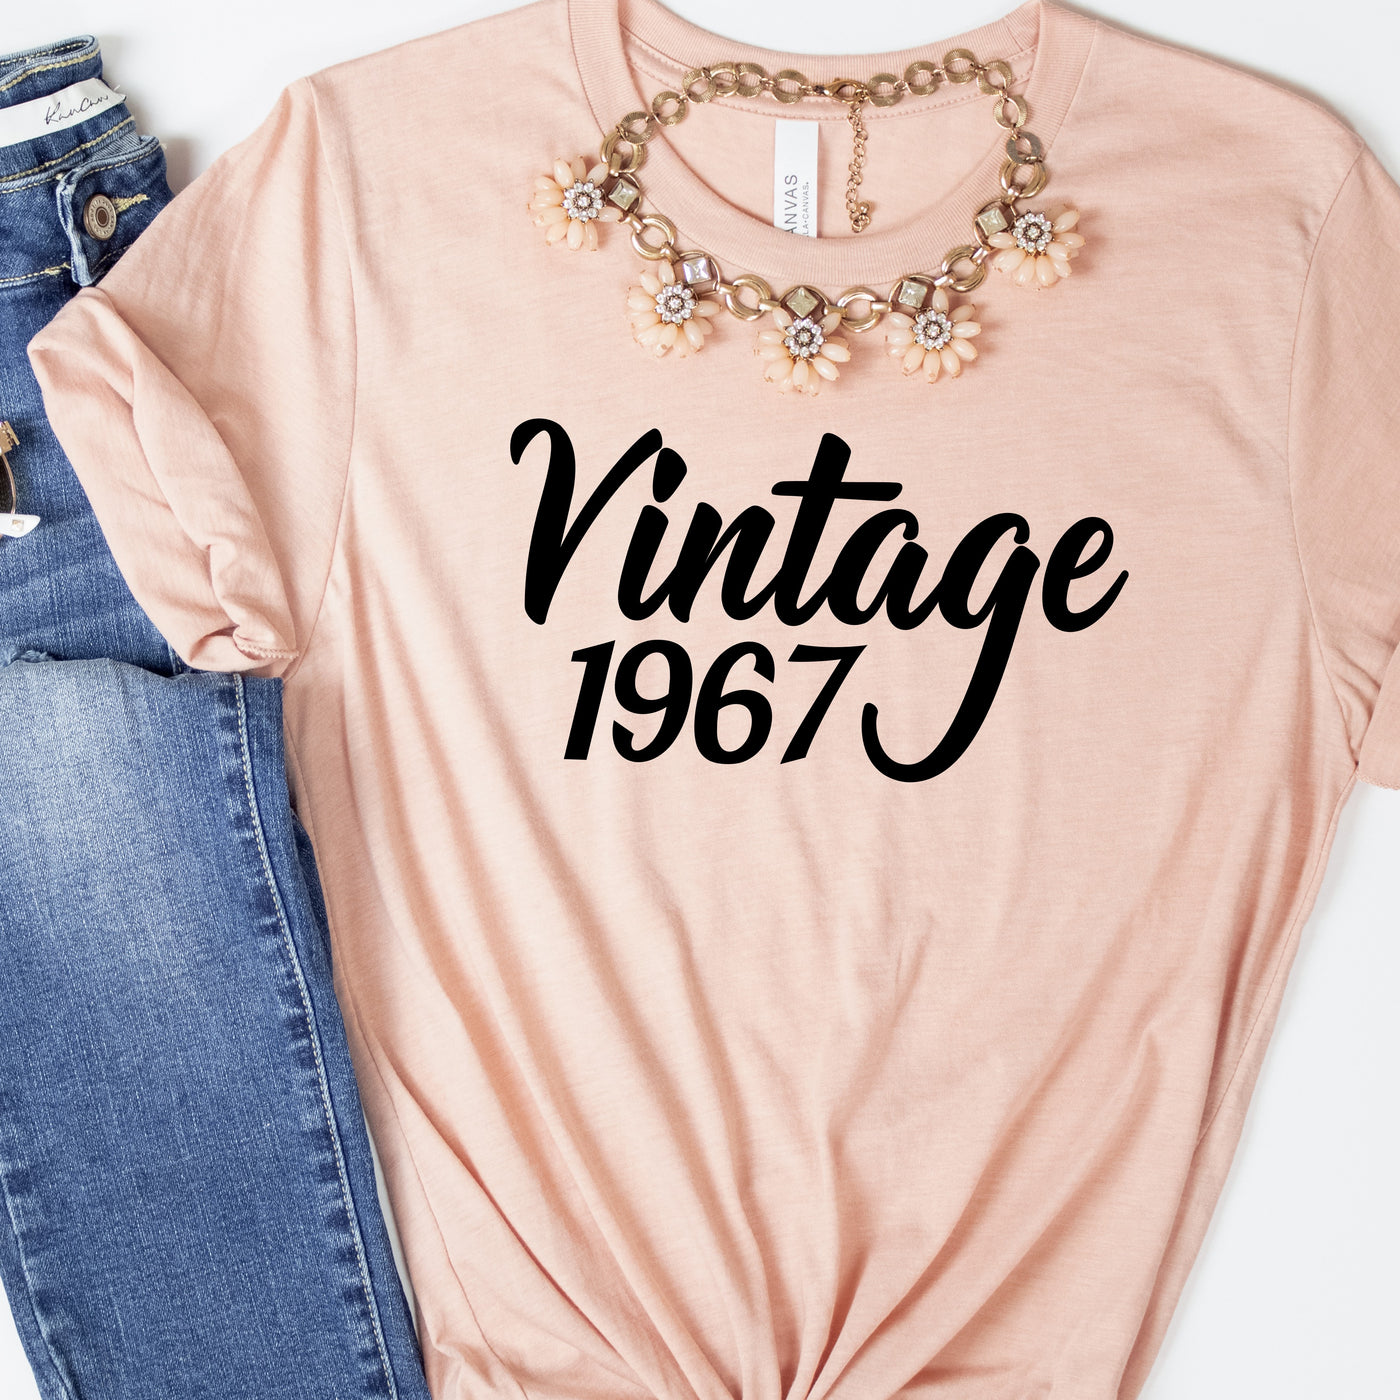 Vintage (ANY YEAR) | Personalized Birthday Shirt | Funny Birthday Shirts